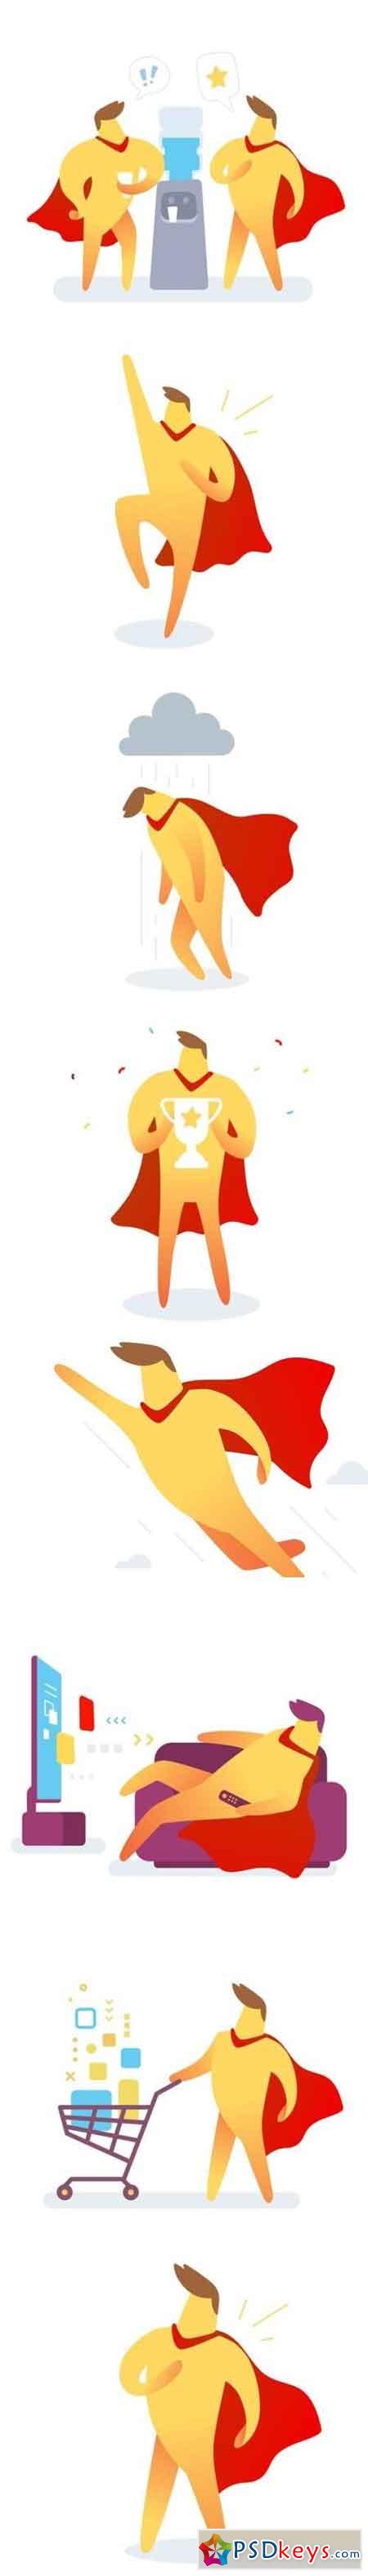 8 a cool superman illustrations